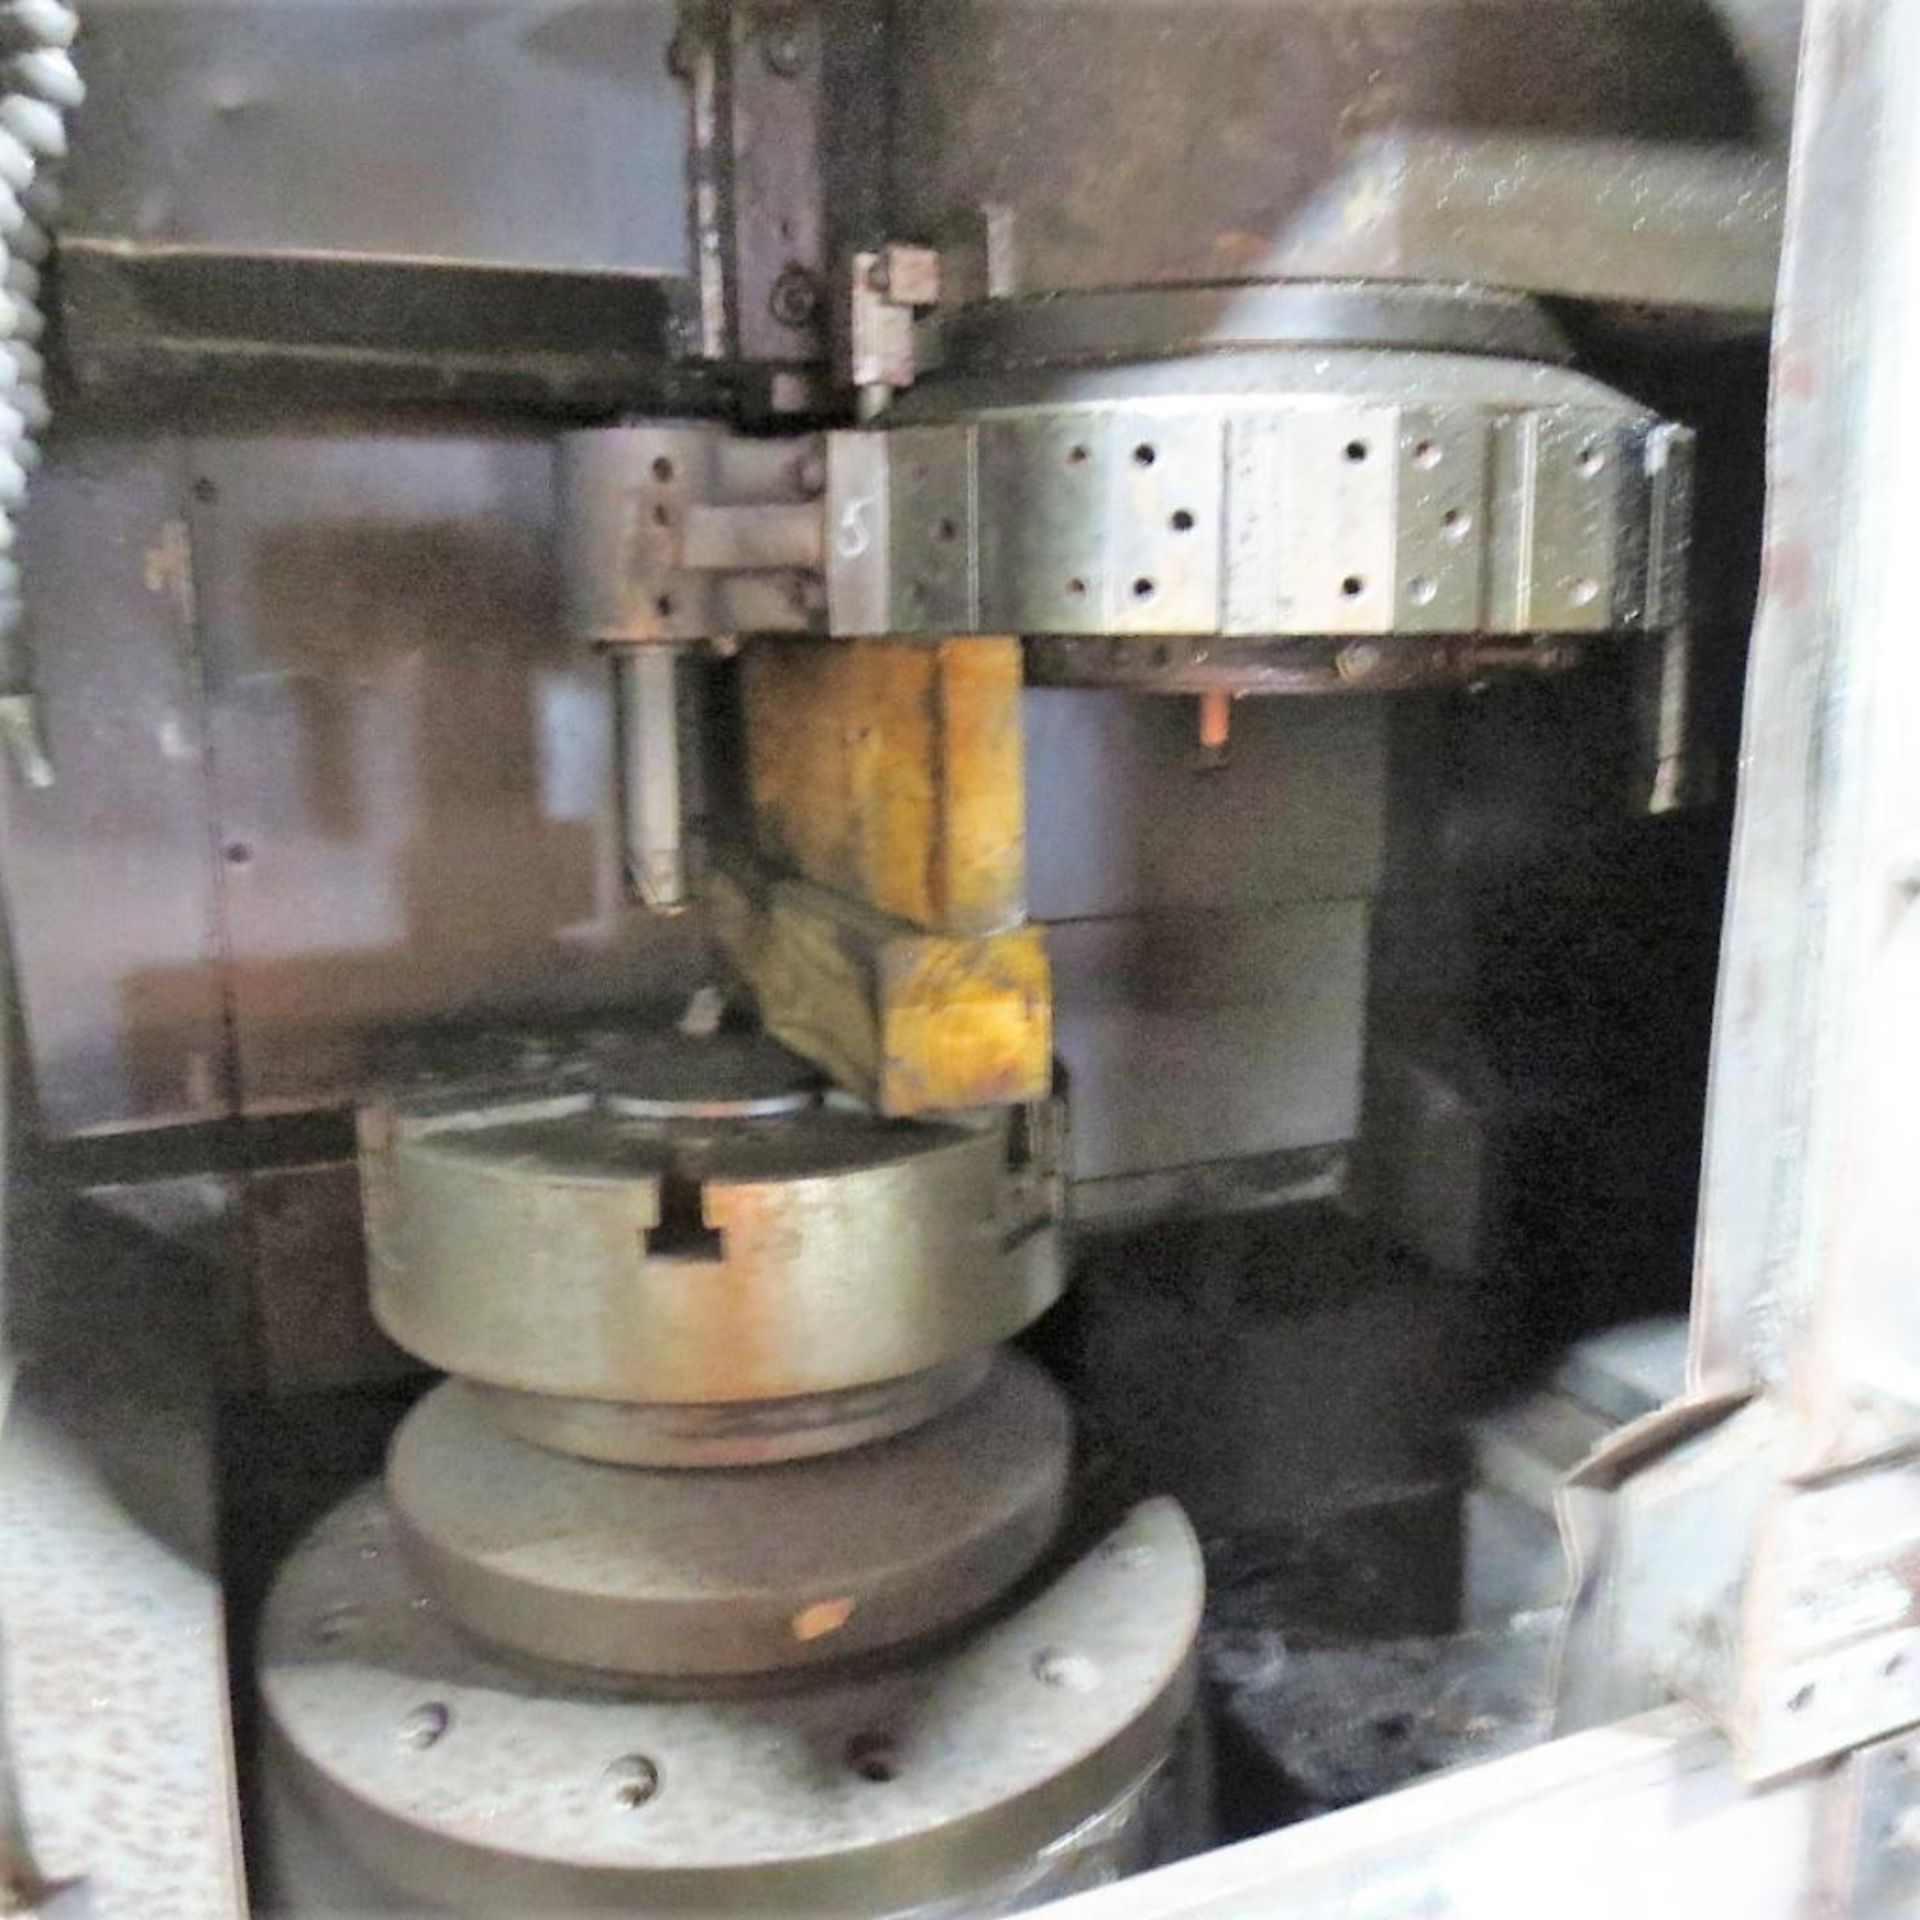 Doosan Model Dooturn-25P-V5 Vertical CNC Turning Center, S/N LTD0015. Loading Fee is $950.00 - Image 3 of 8